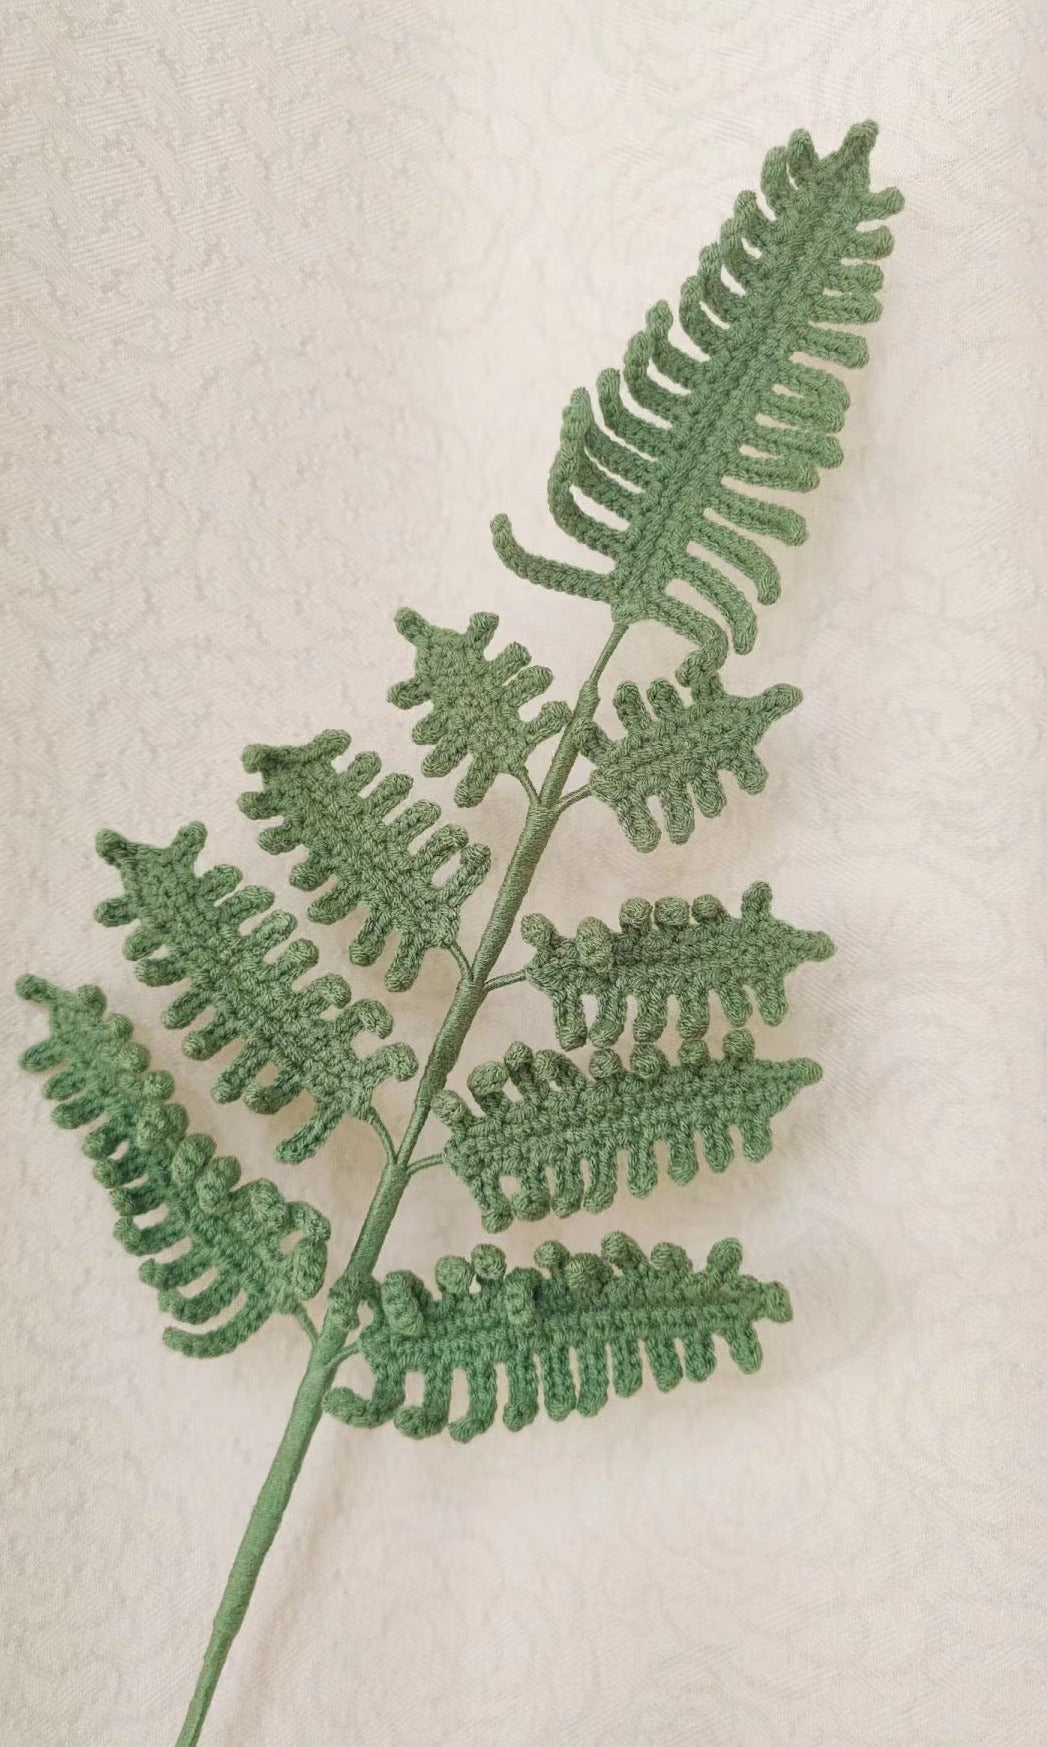 Lilyrosy Crochet  fern leaf patterns with step by step video tutorial